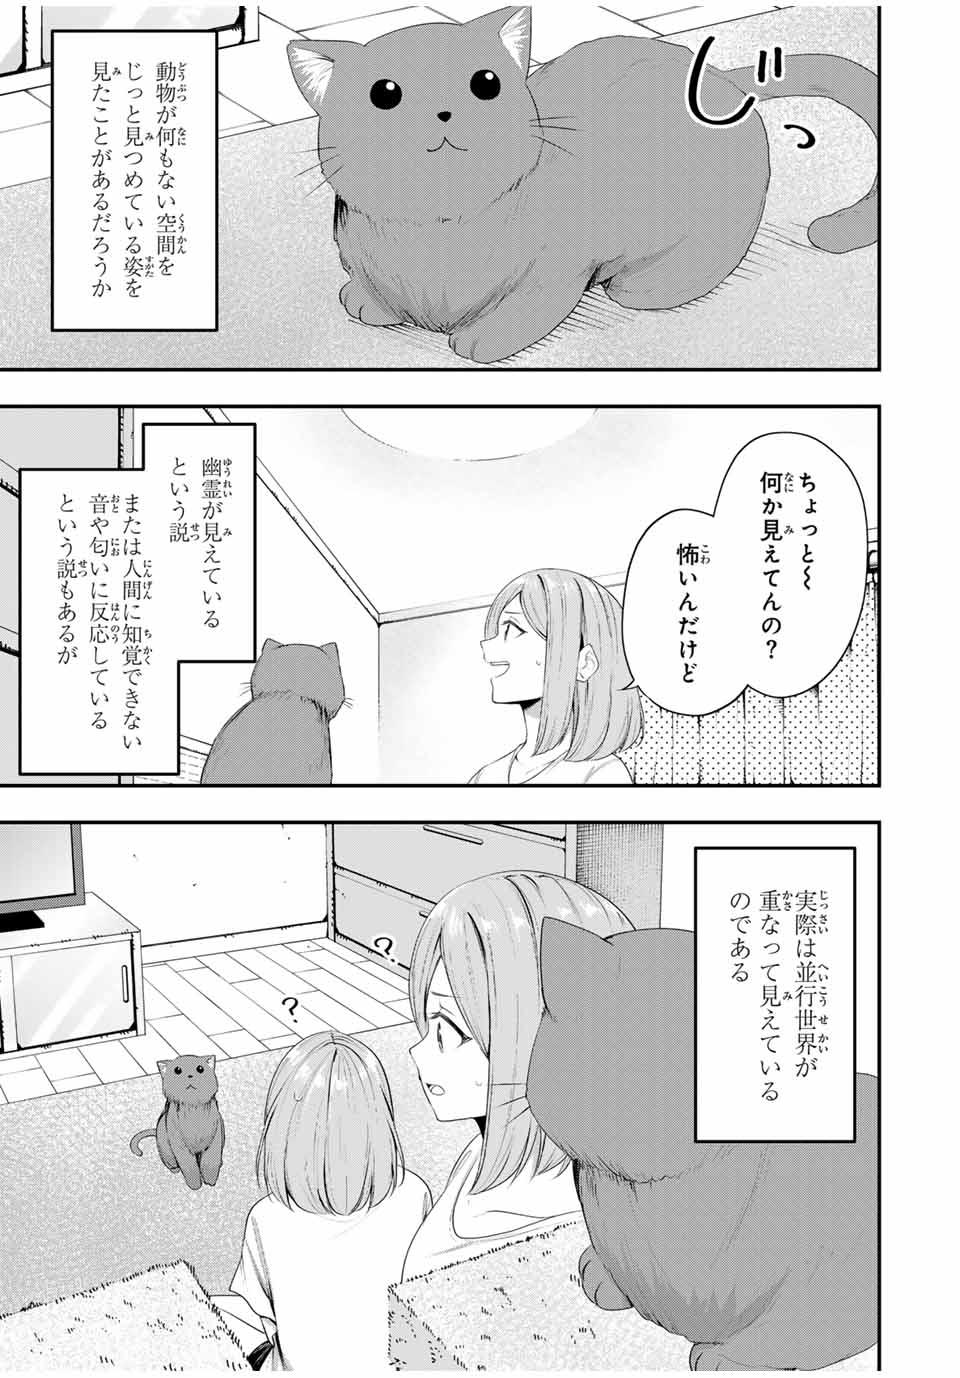 Heroine wa xx Okasegitai - Chapter 15 - Page 4